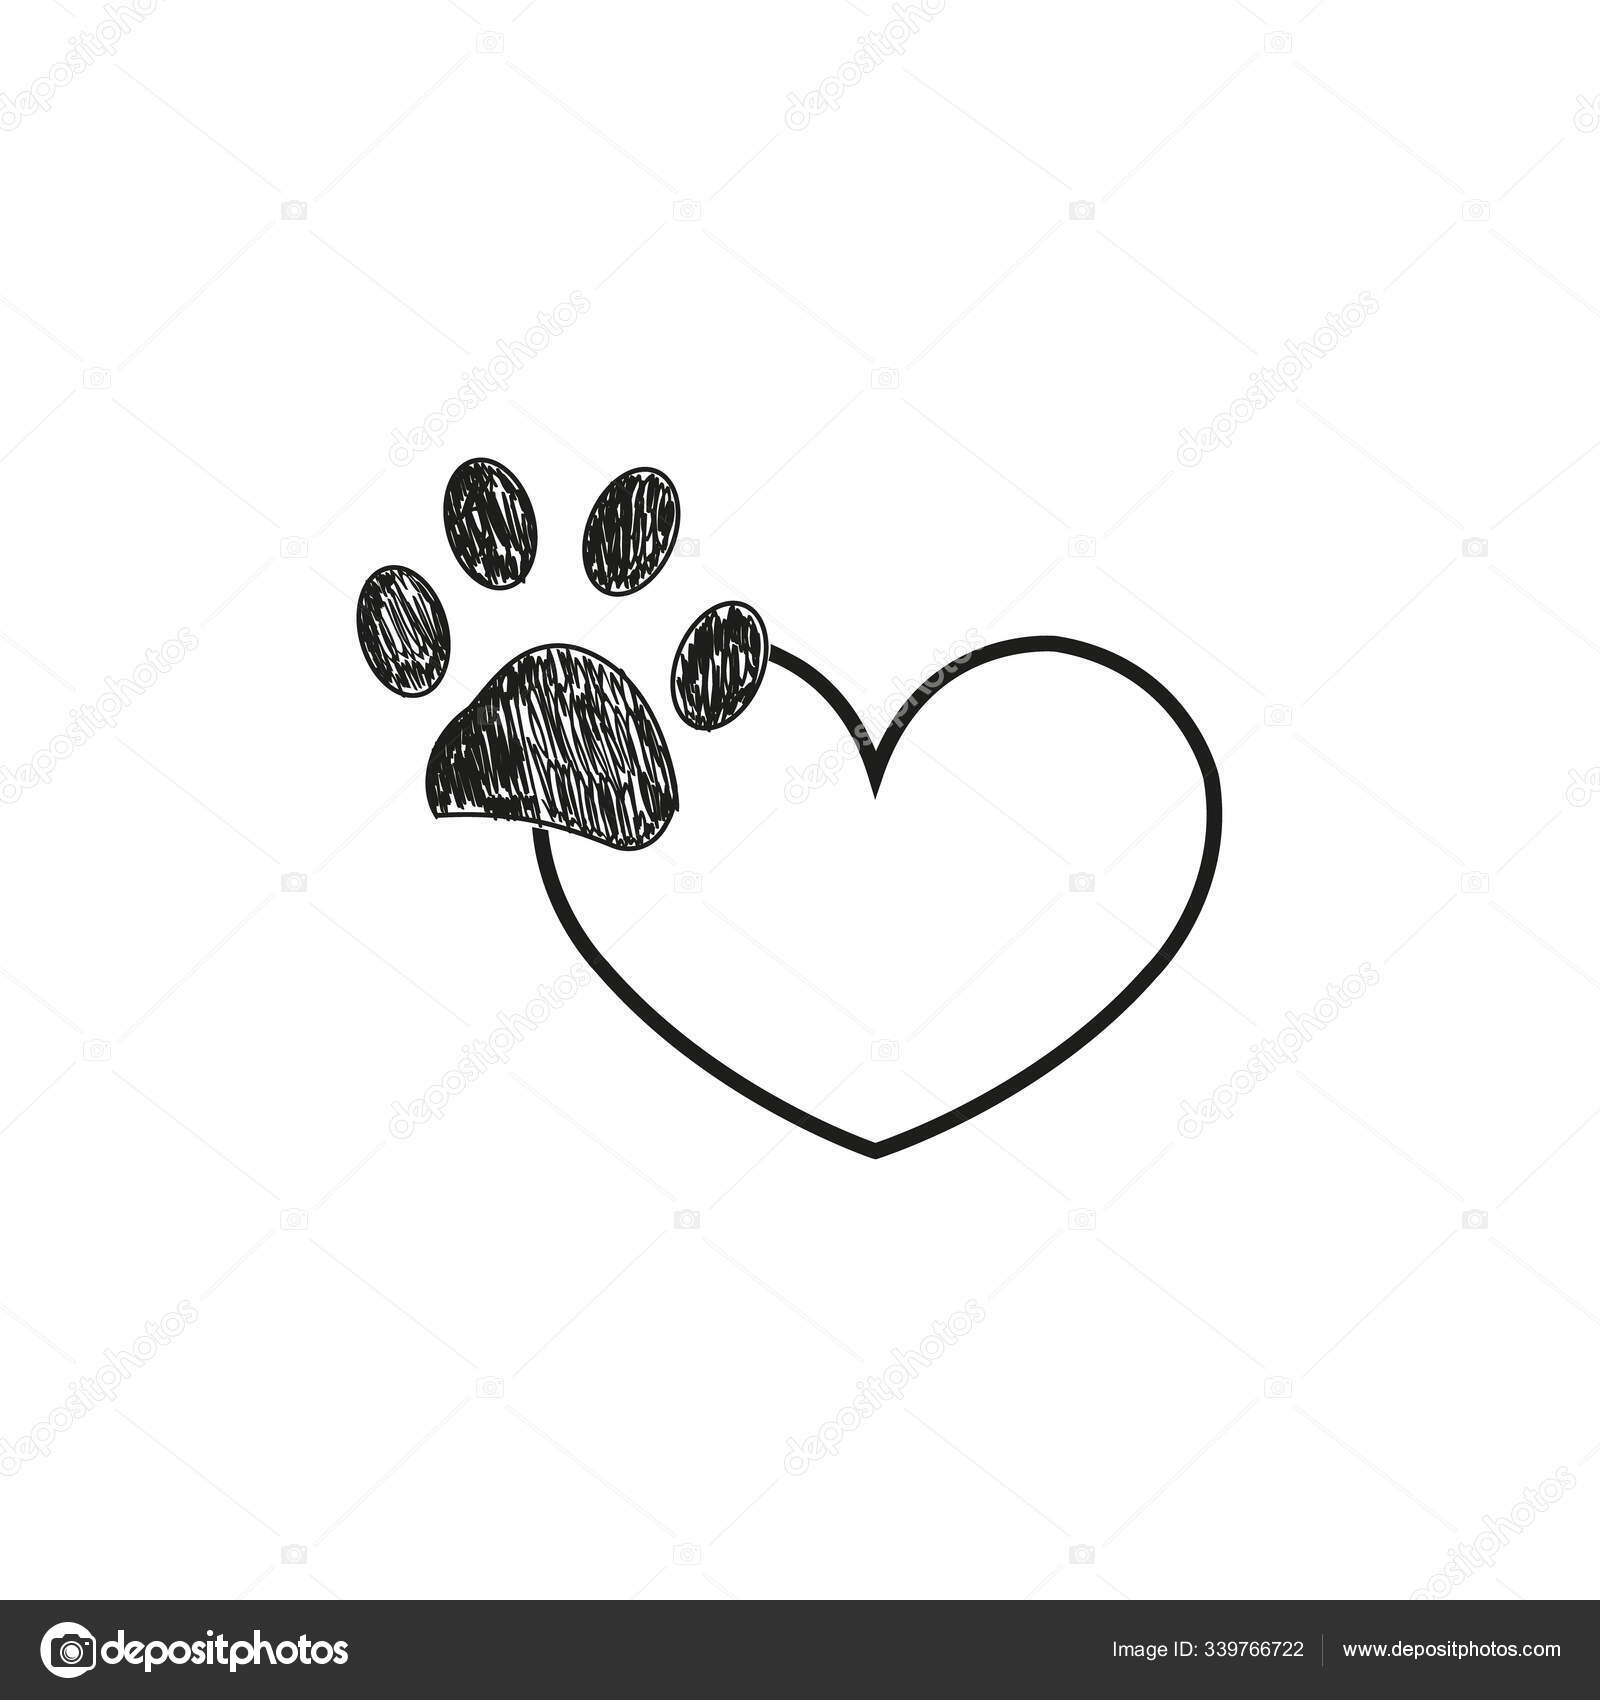 Cute Black Footprints With Hearts Tattoo Design